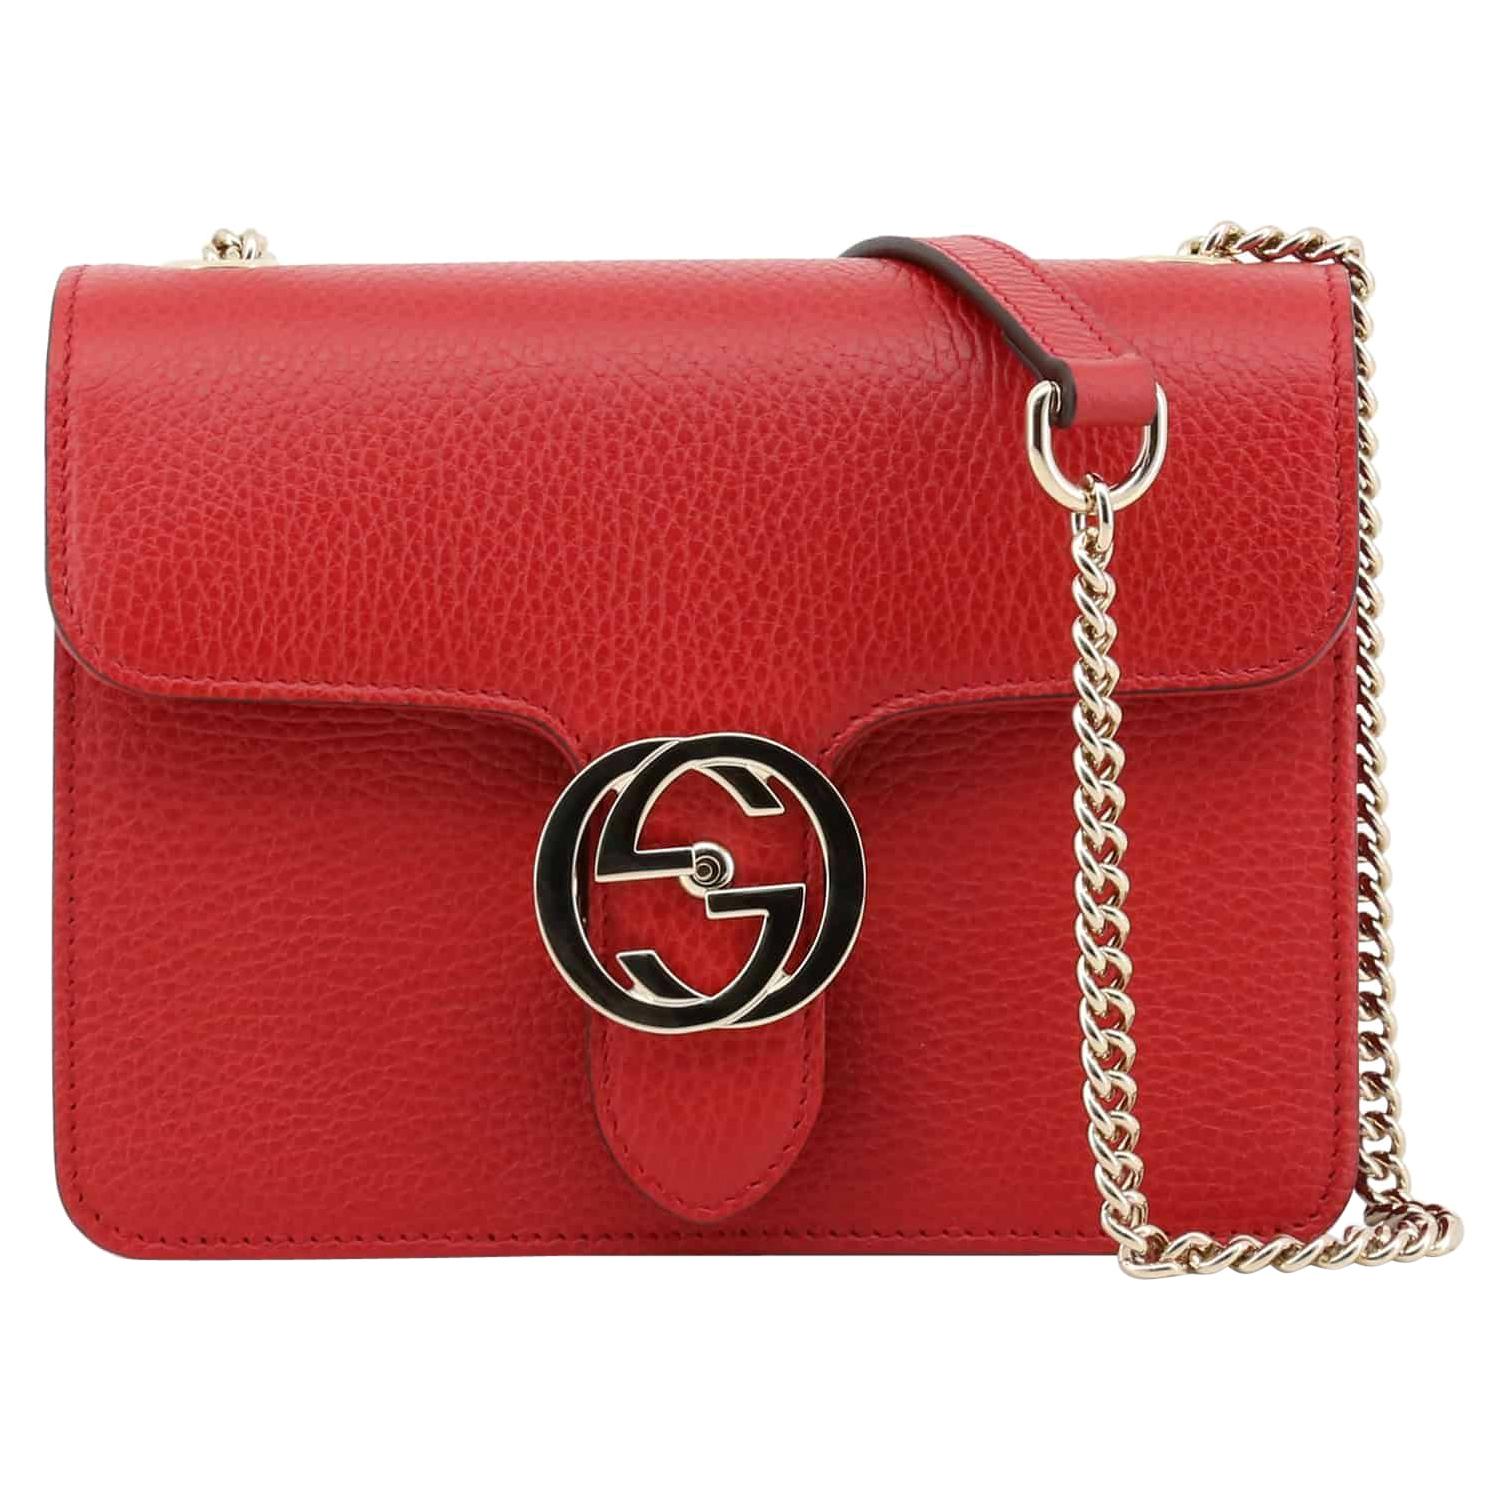 Gucci New Red leather Crossbody Bag Dollar Calf Interlocking Chain